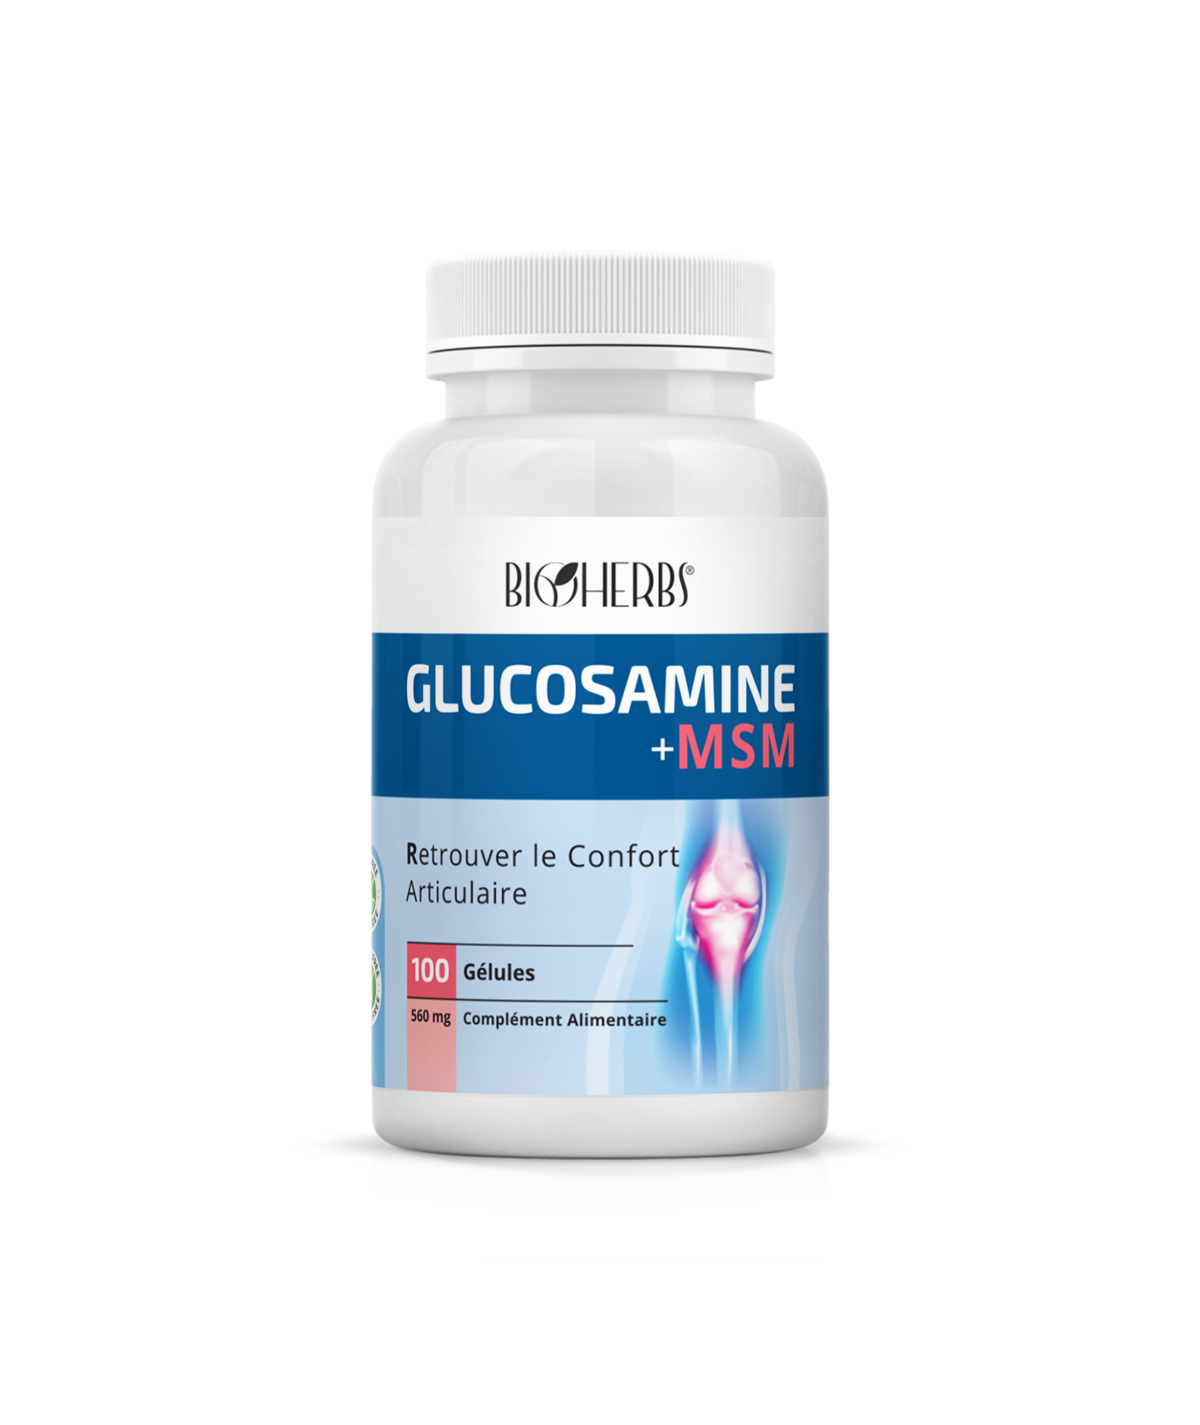 Bioherbs Glucosamine + MSM